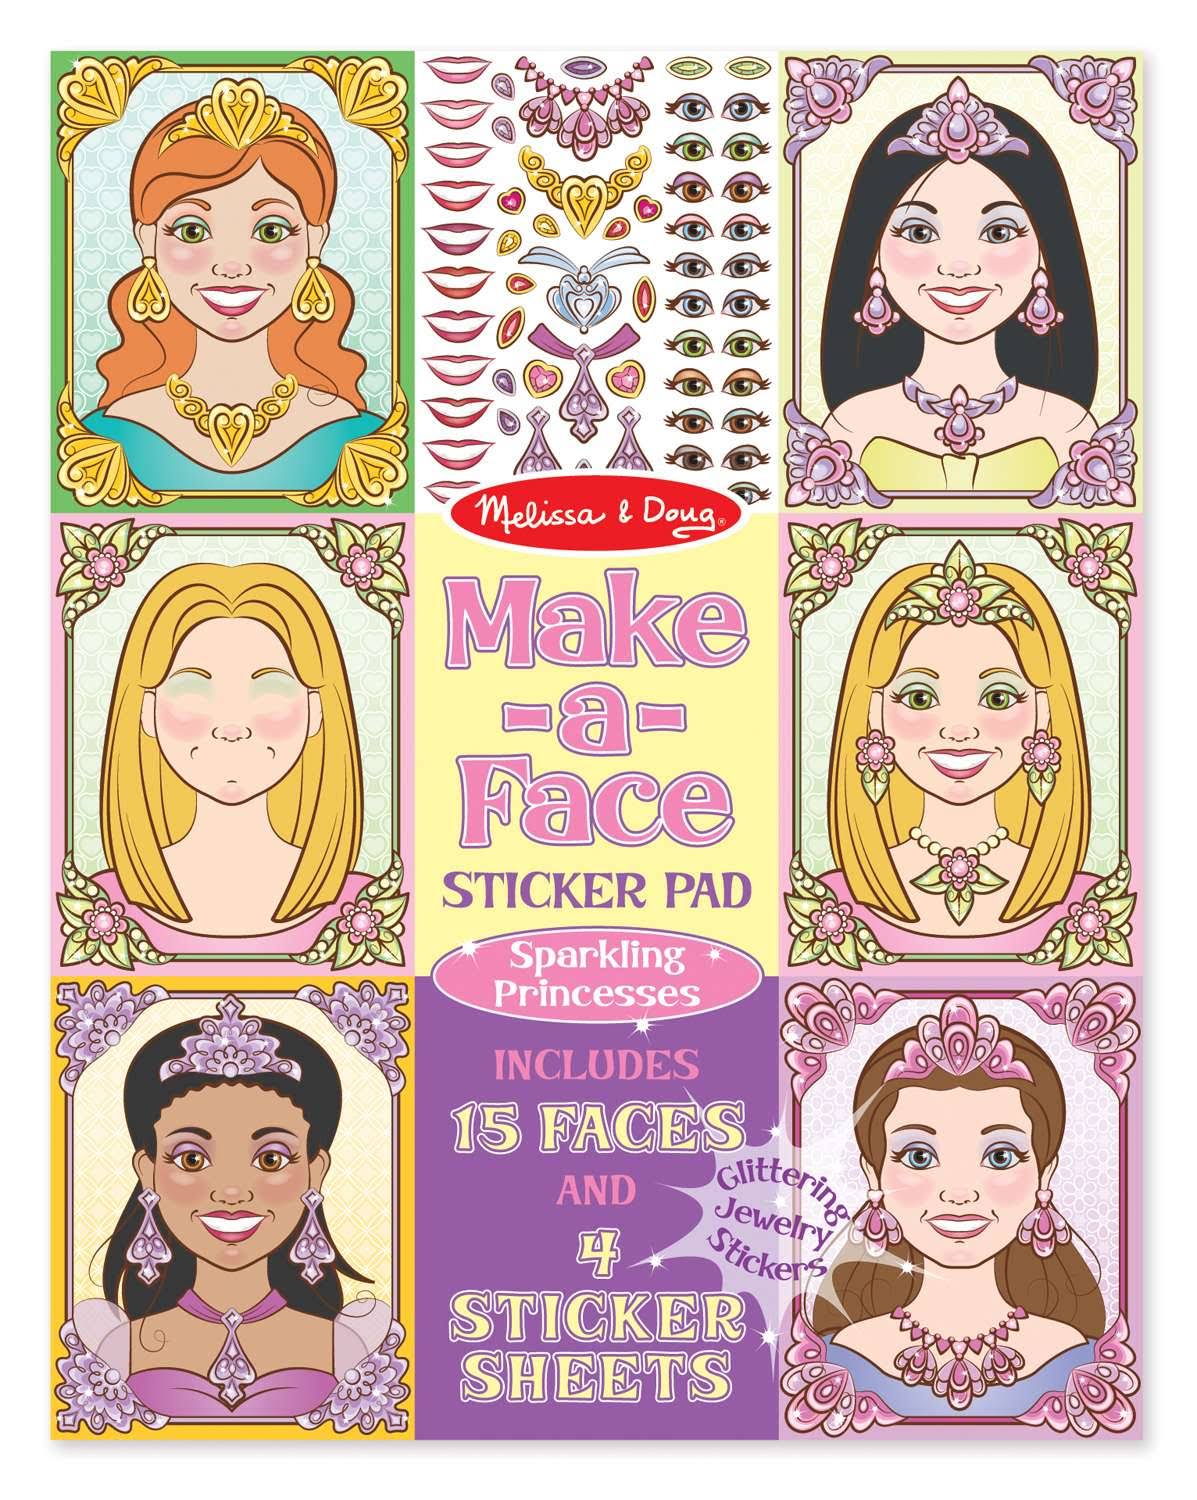 Melissa & Doug Make-a-Face Sticker Pad